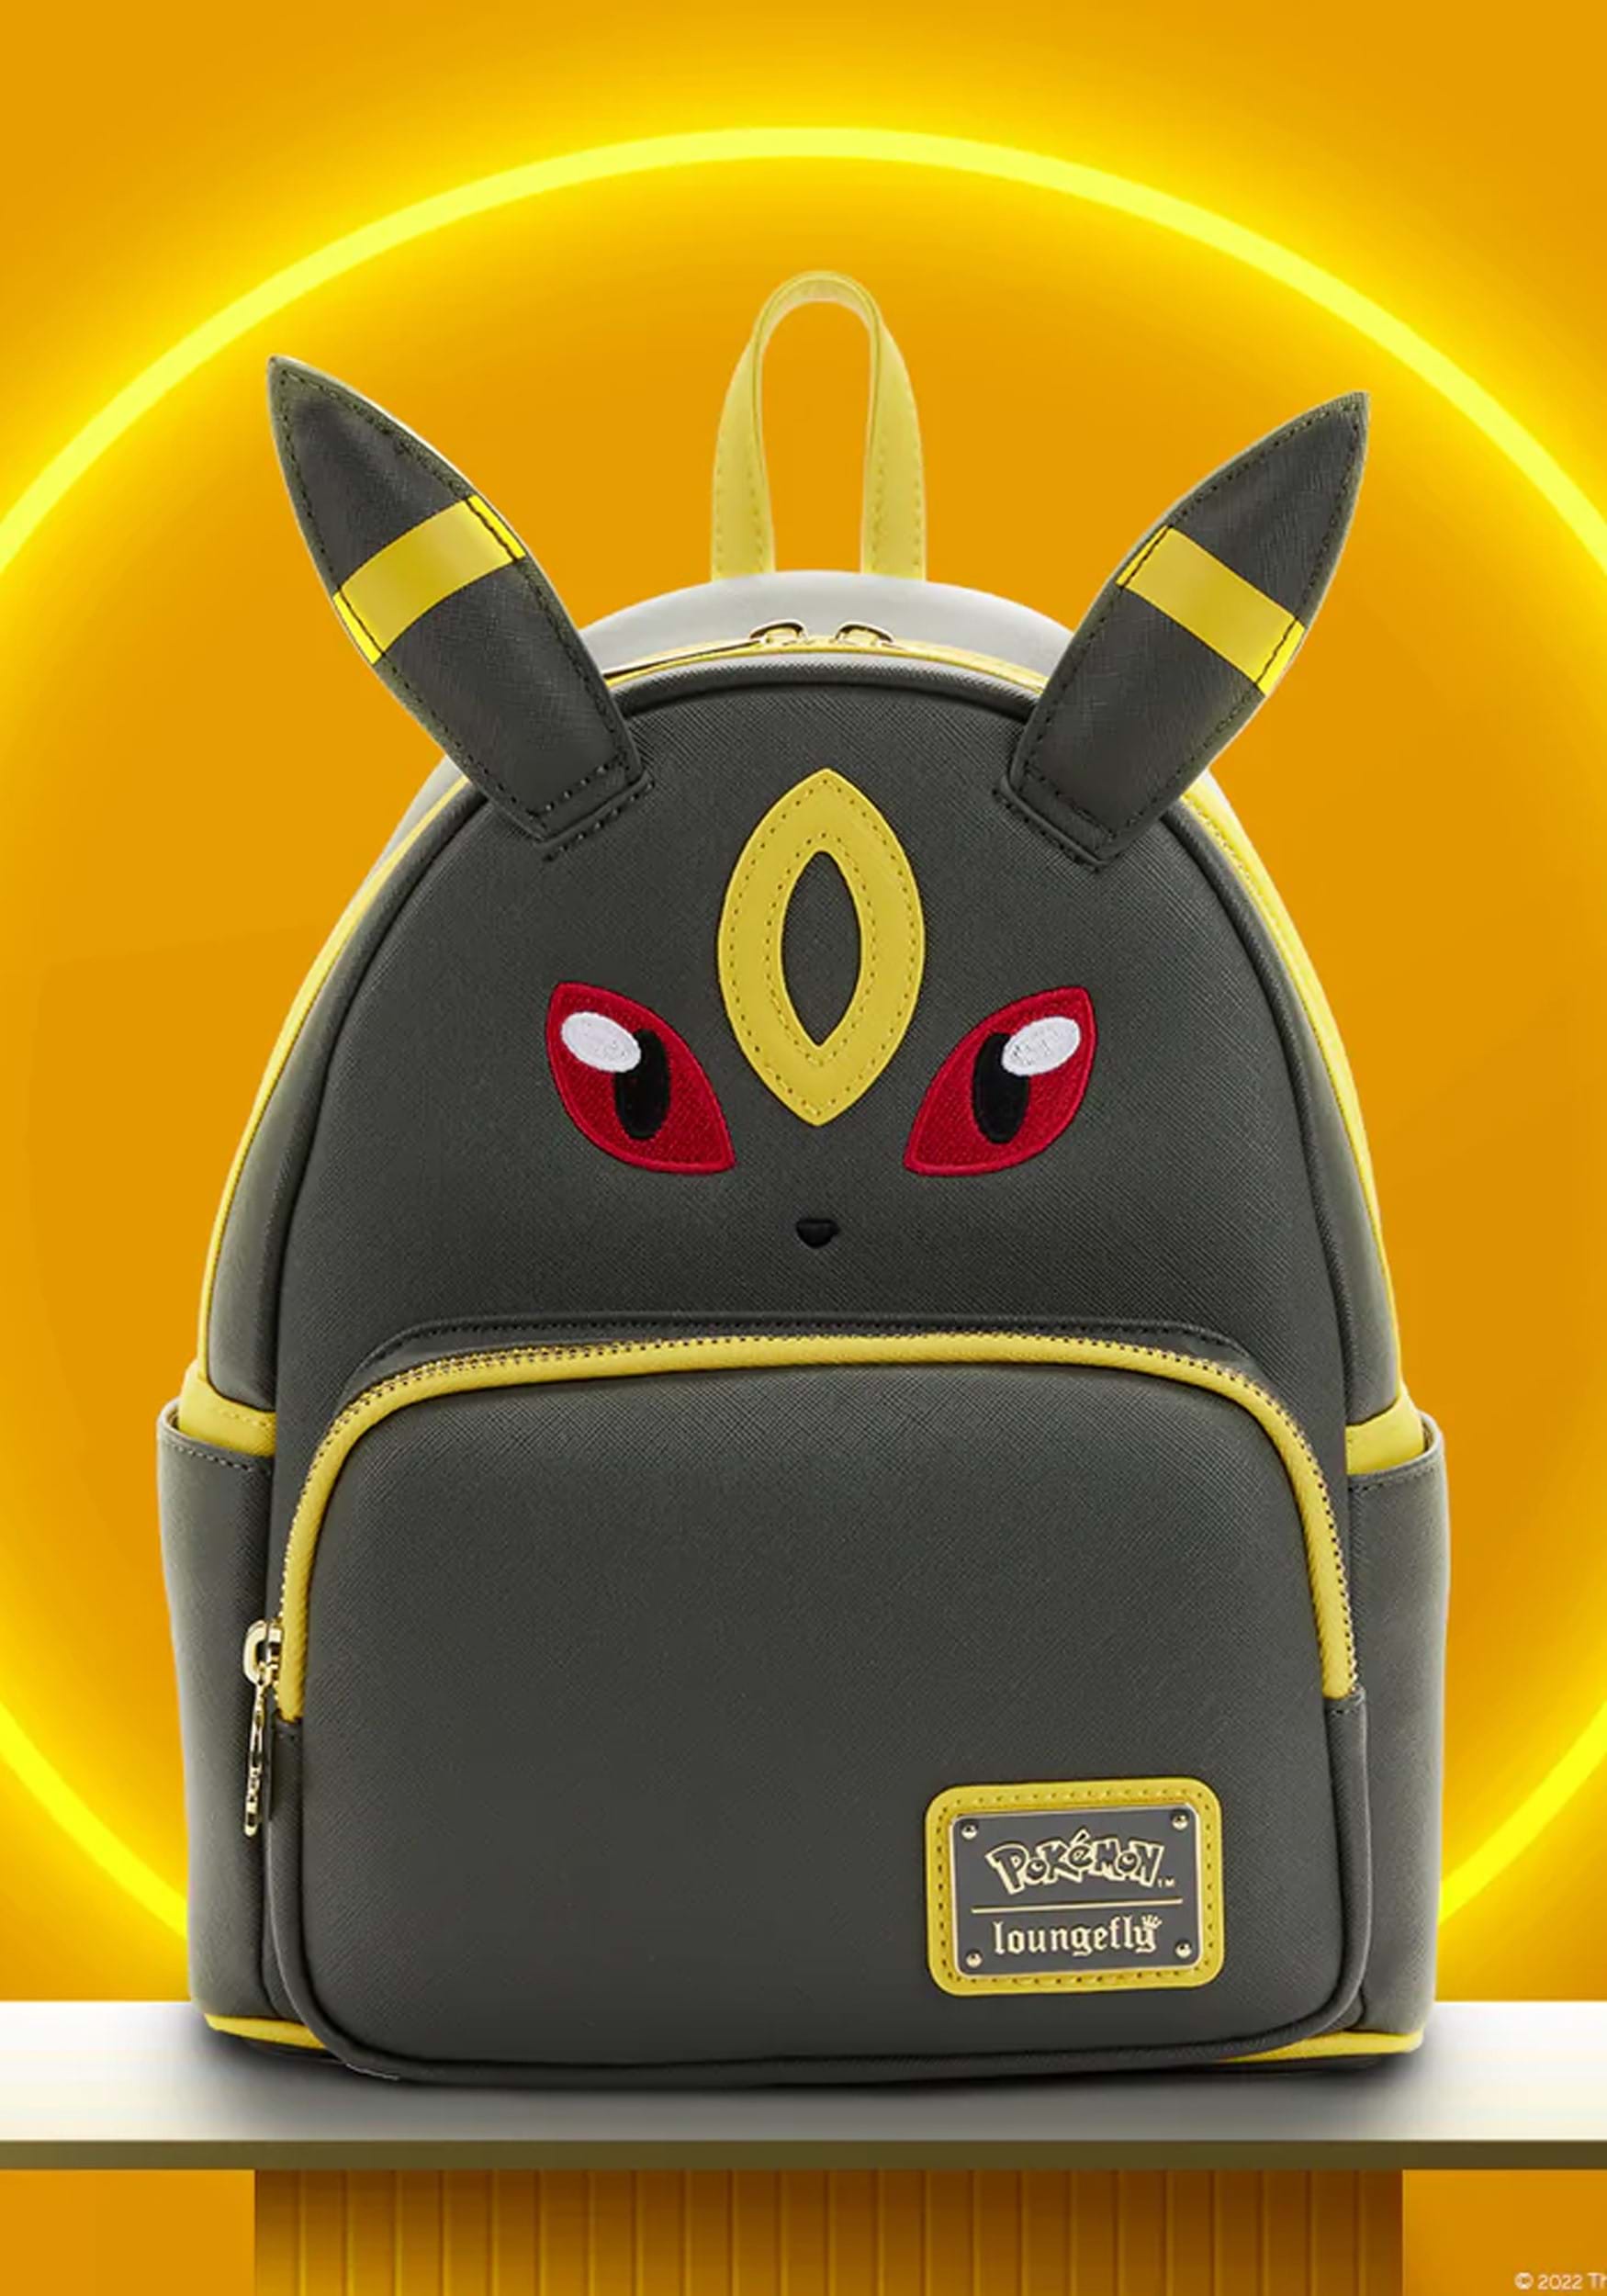 Give Åh gud Akvarium Loungefly Pokémon Umbreon Mini Backpack